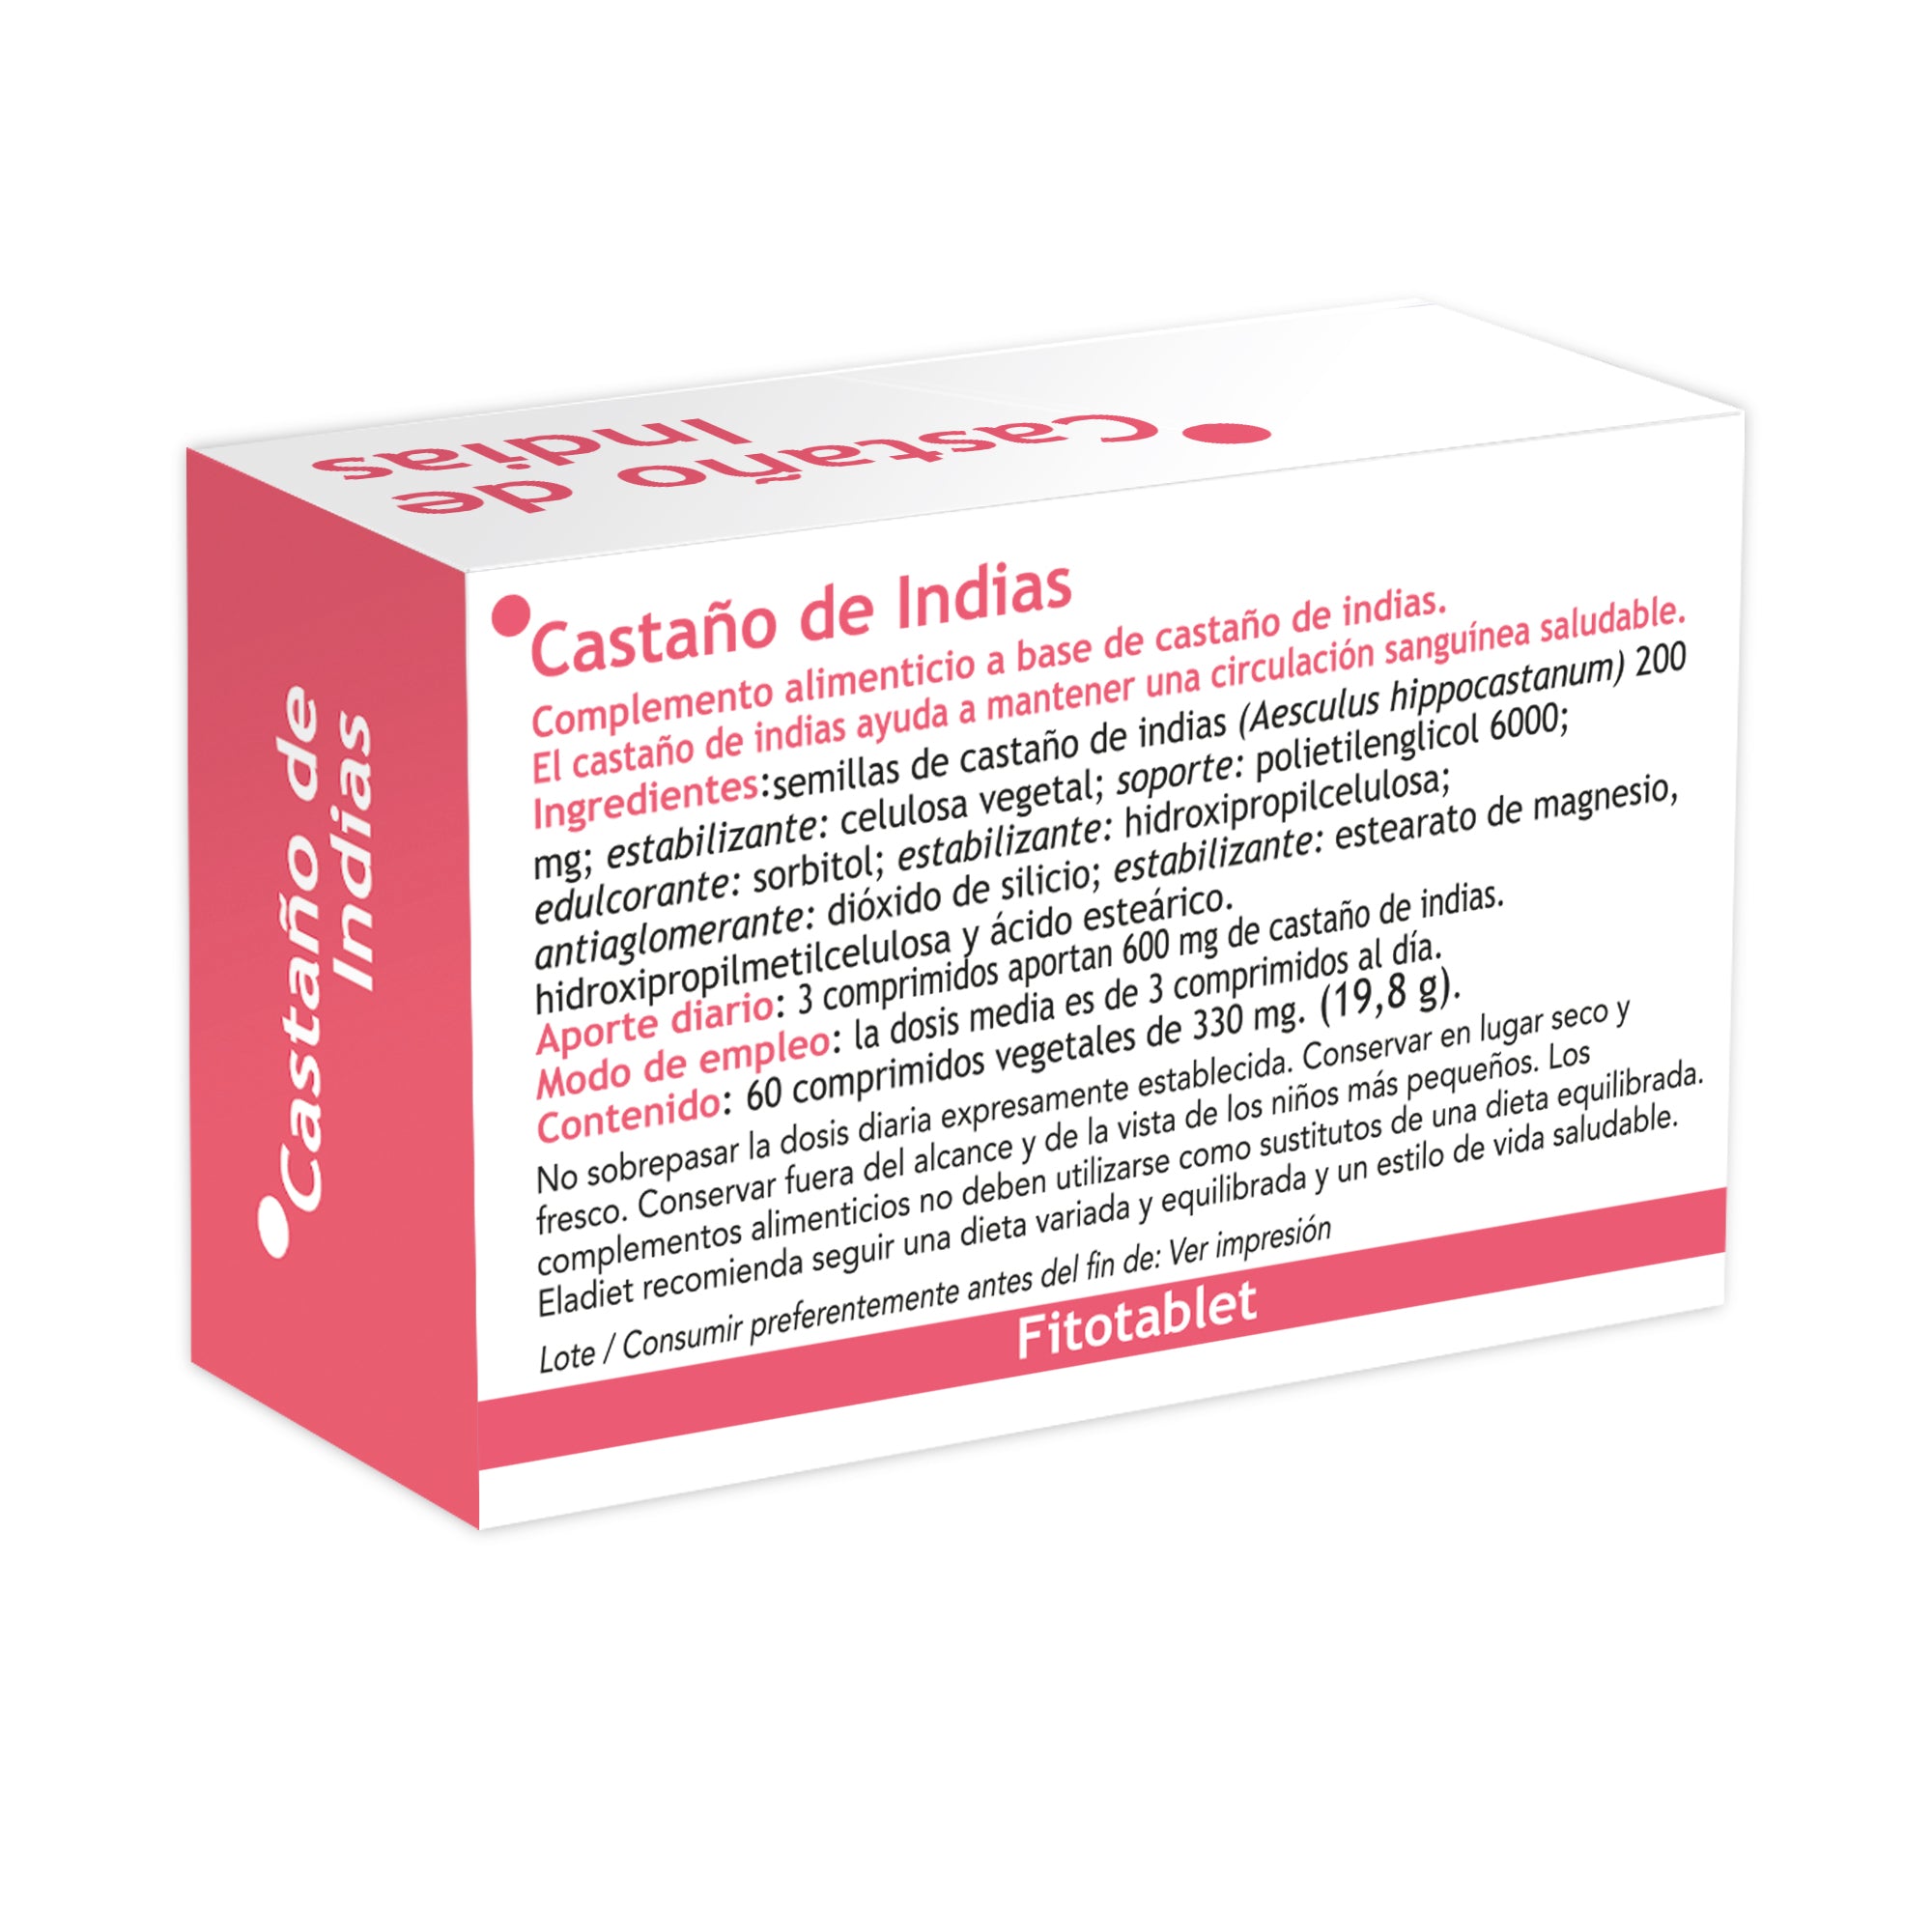 Eladiet - Fitotablet Castaño Indias 330Mg 60 Comprimidos - Biopharmacia, Parafarmacia online